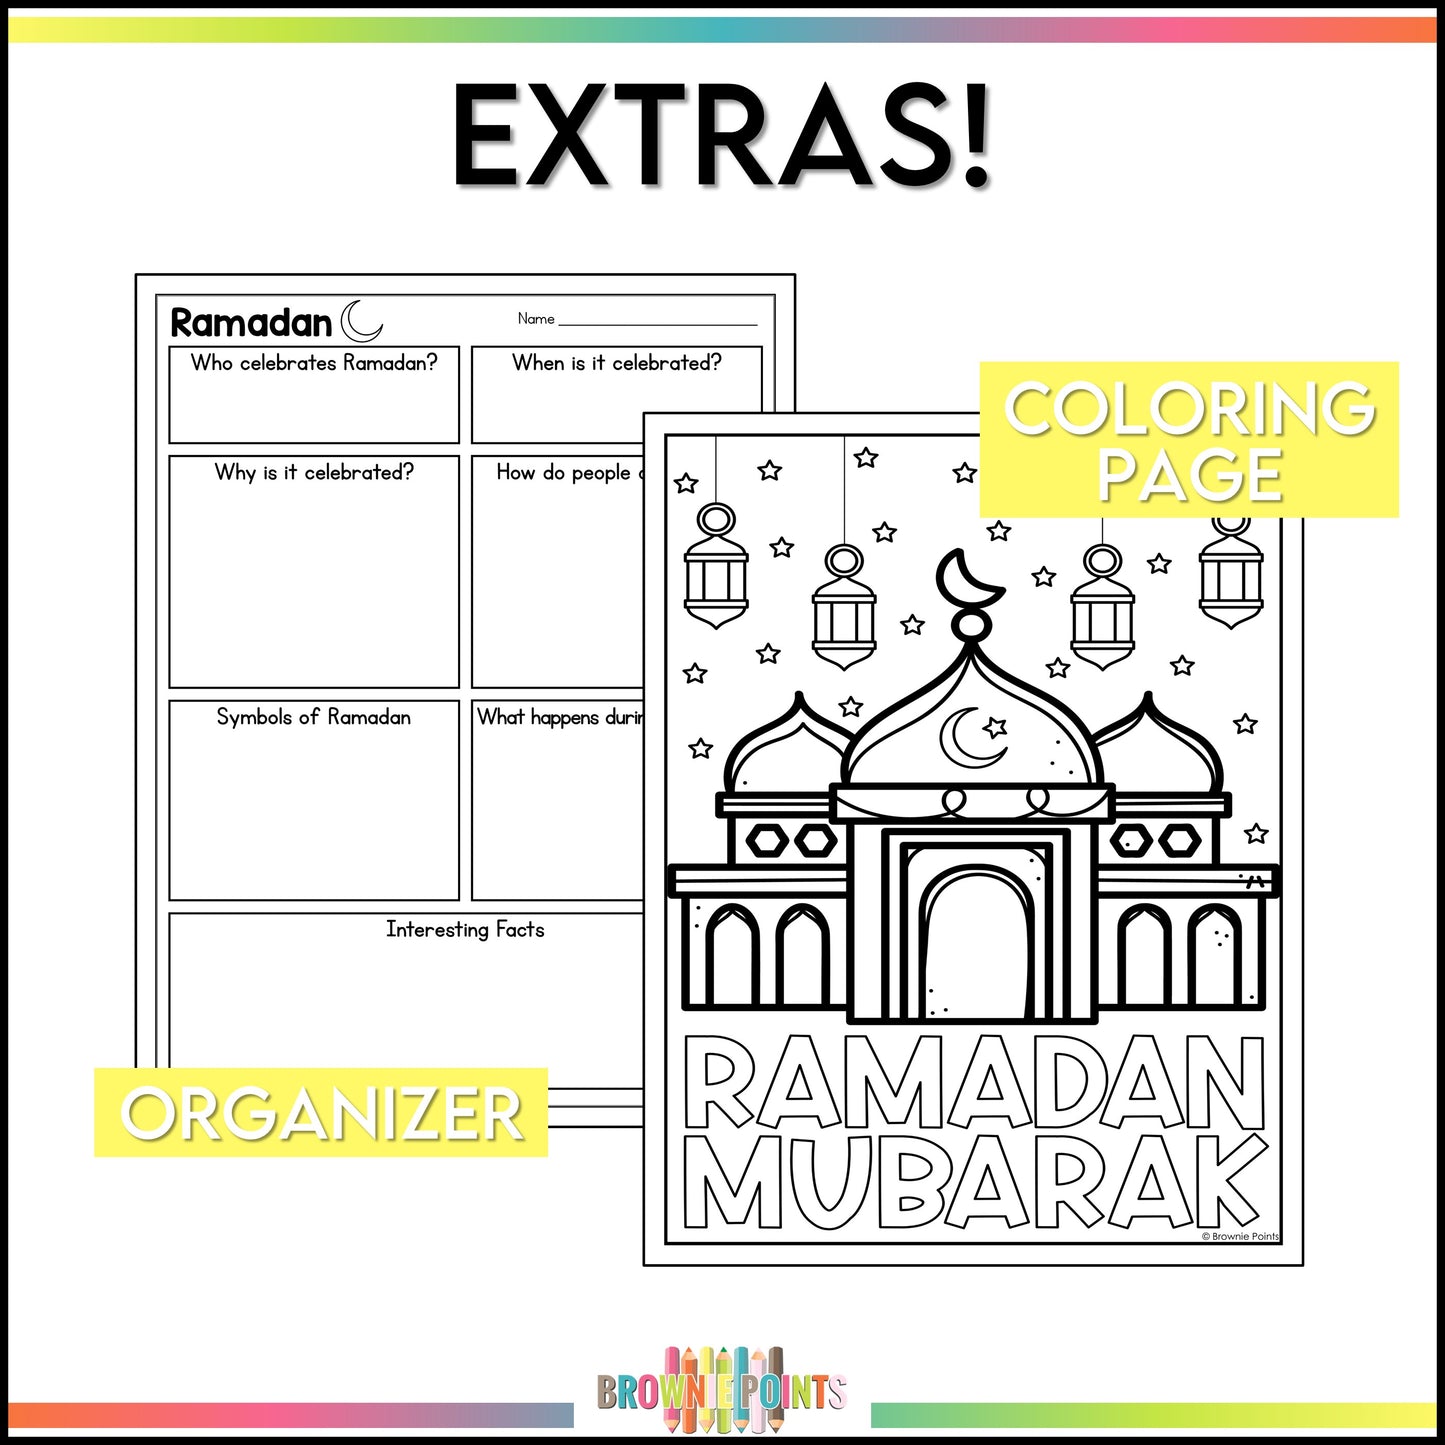 Ramadan Collaborative Poster